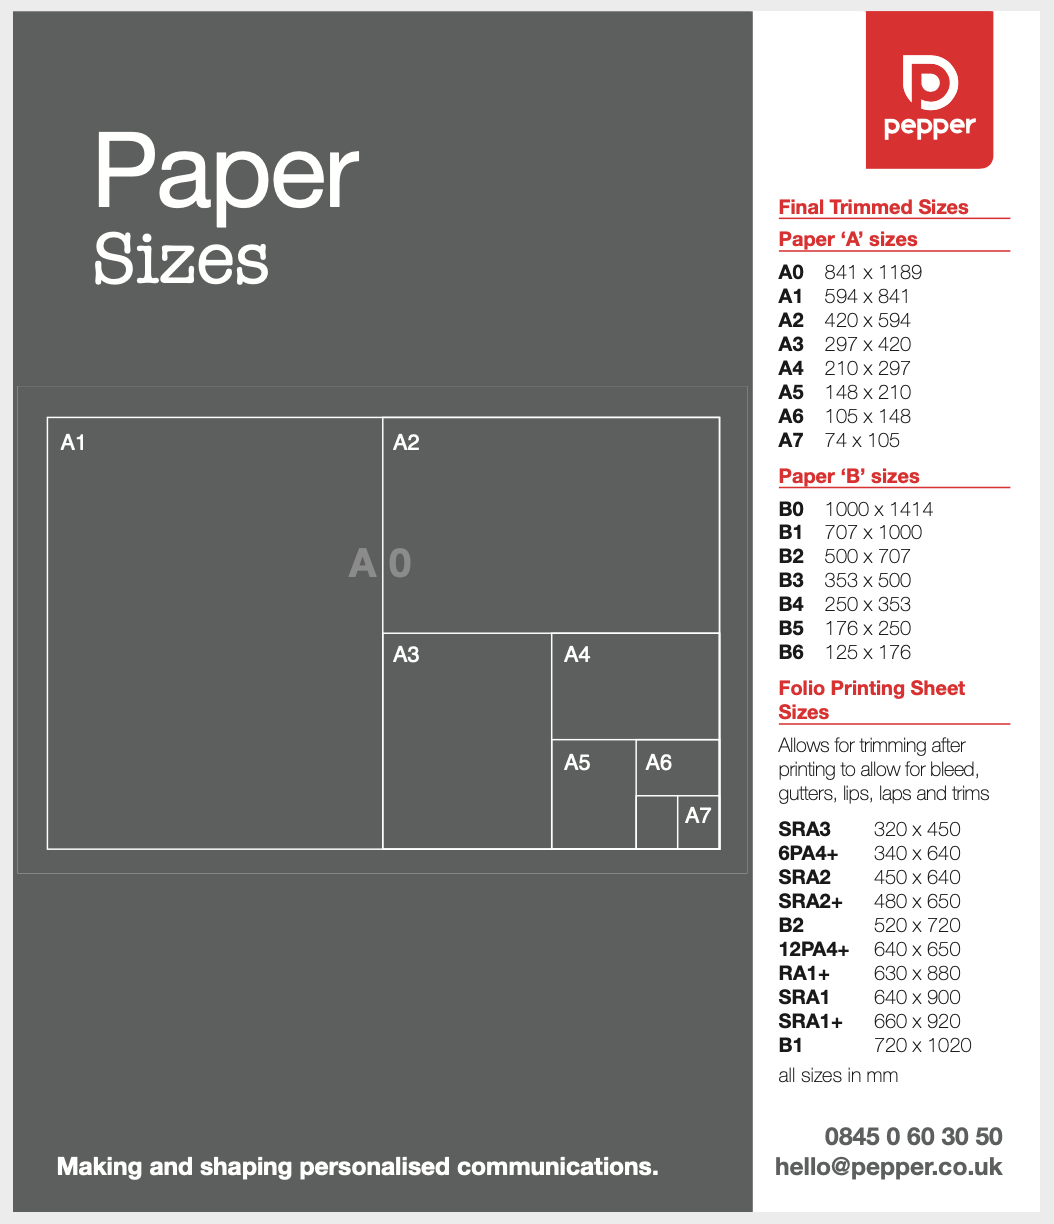 Paper sizes